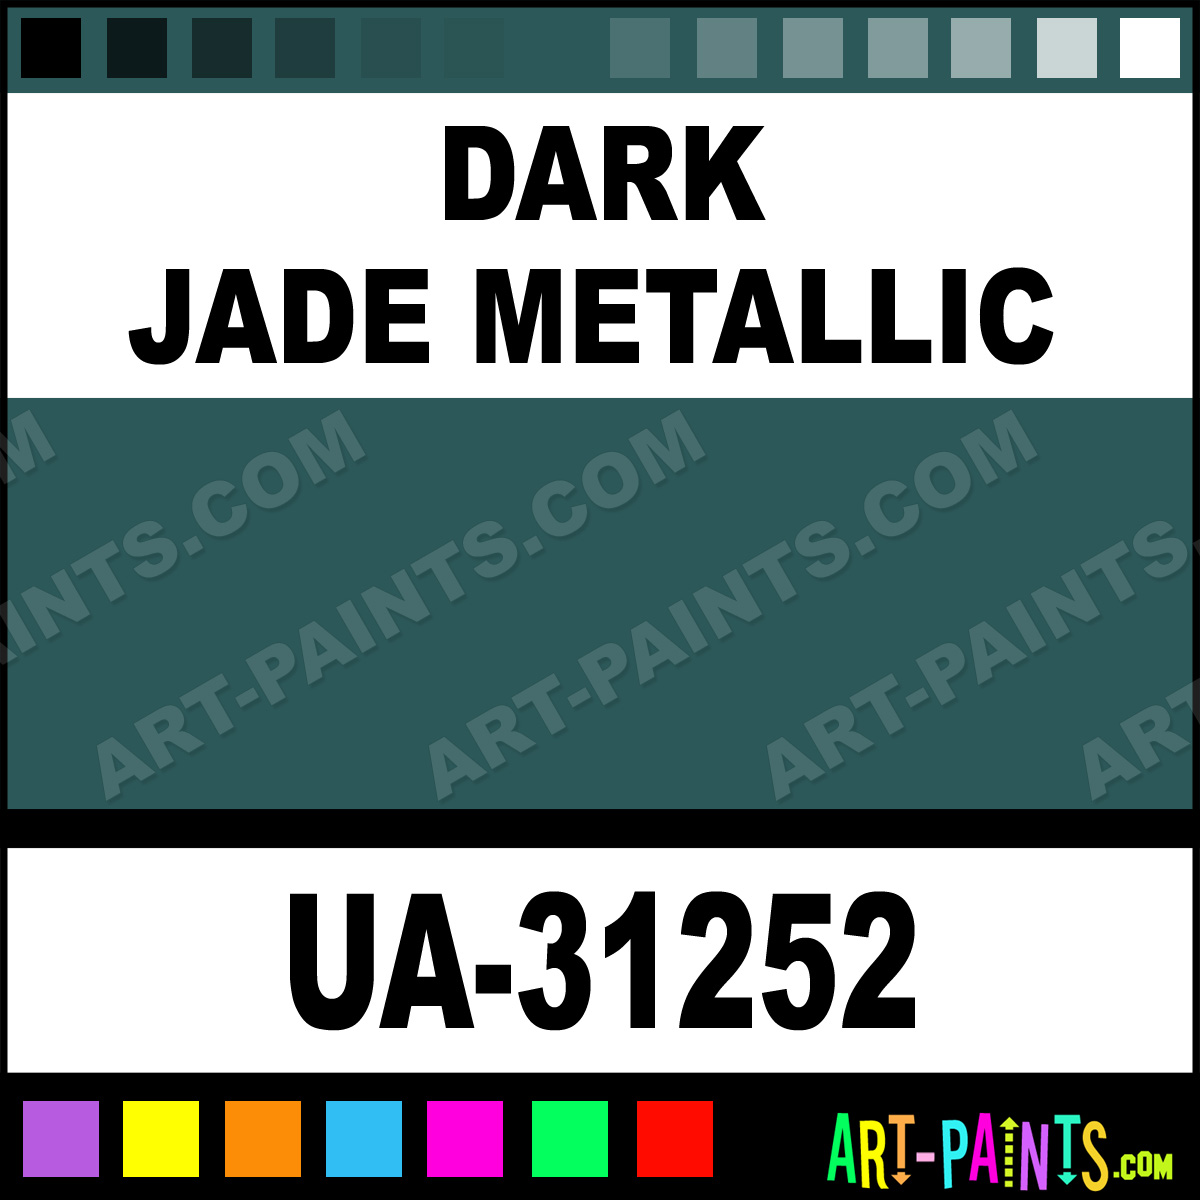 Dark Jade Metallic Ultra-Glo Enamel Paints - UA-31252 - Dark Jade